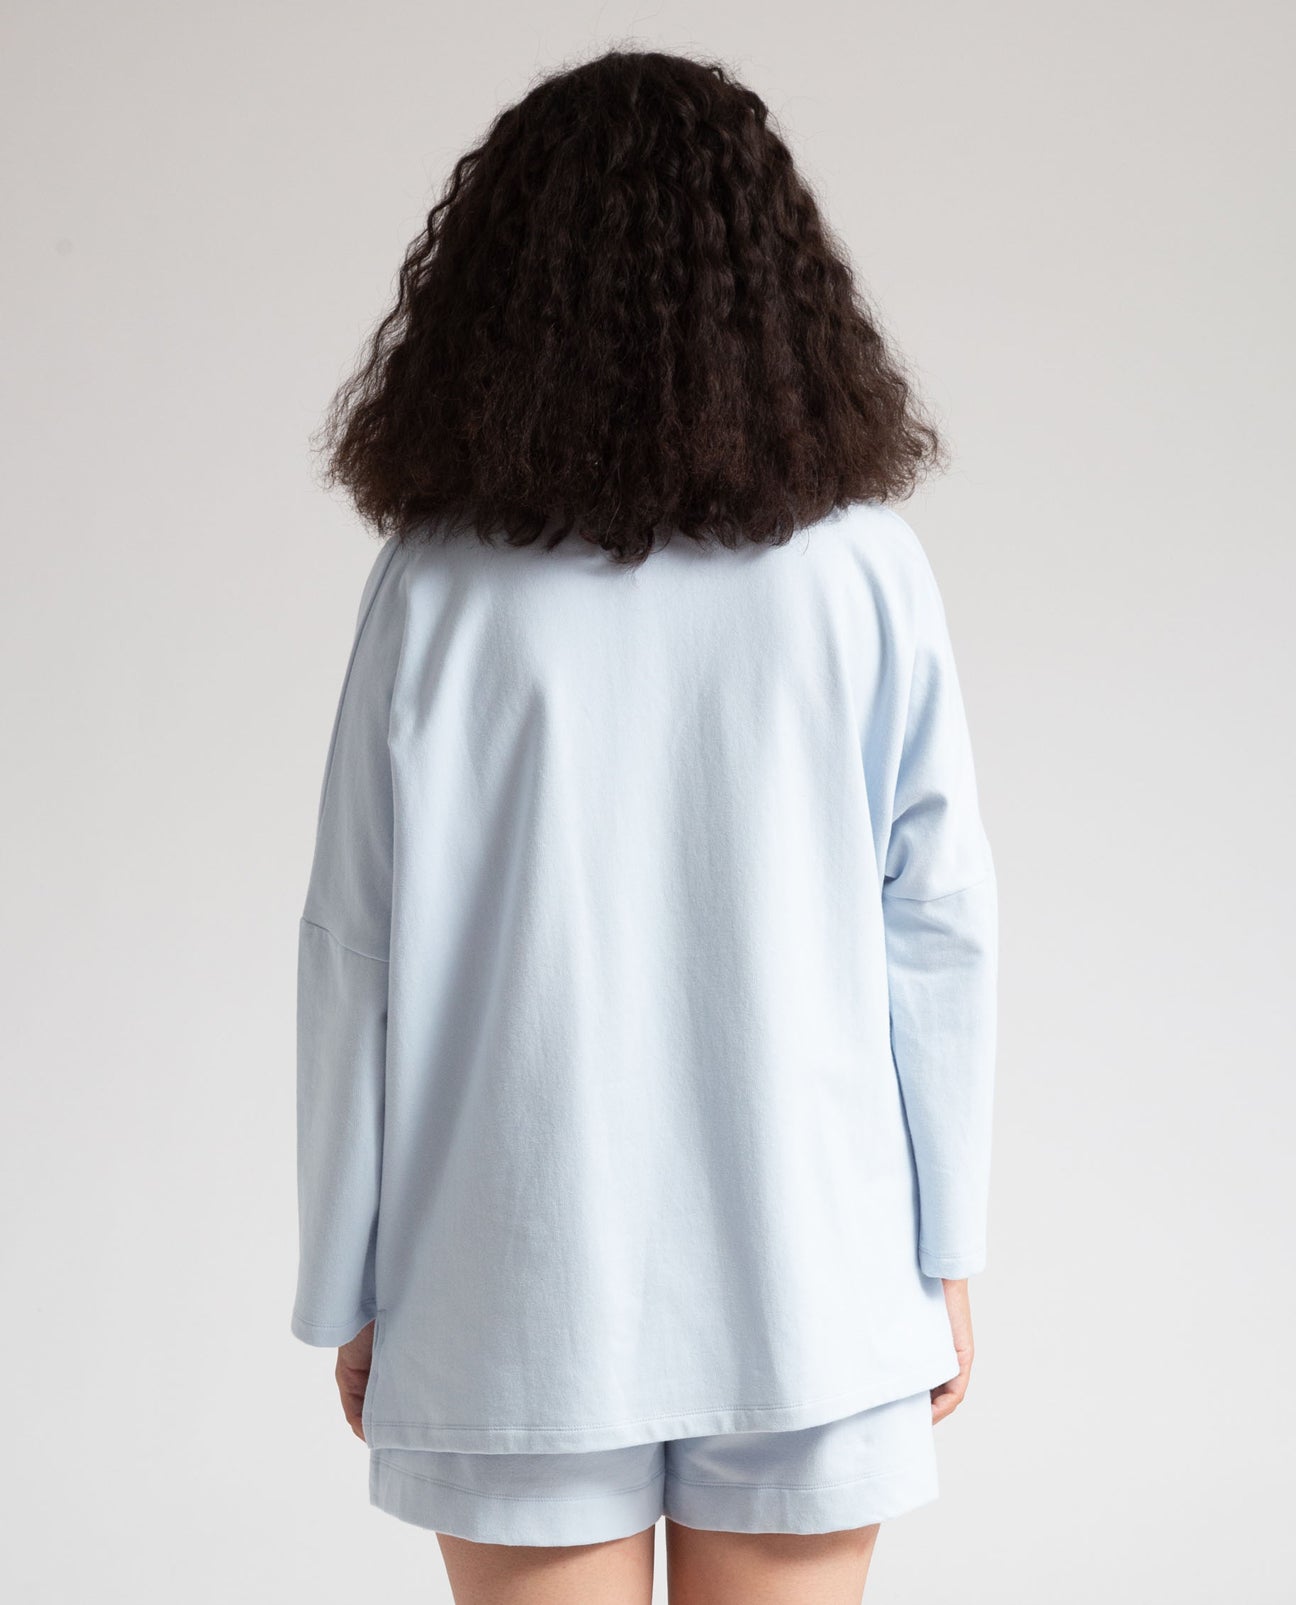 Soma Organic Cotton Sweatshirt In Pale Blue